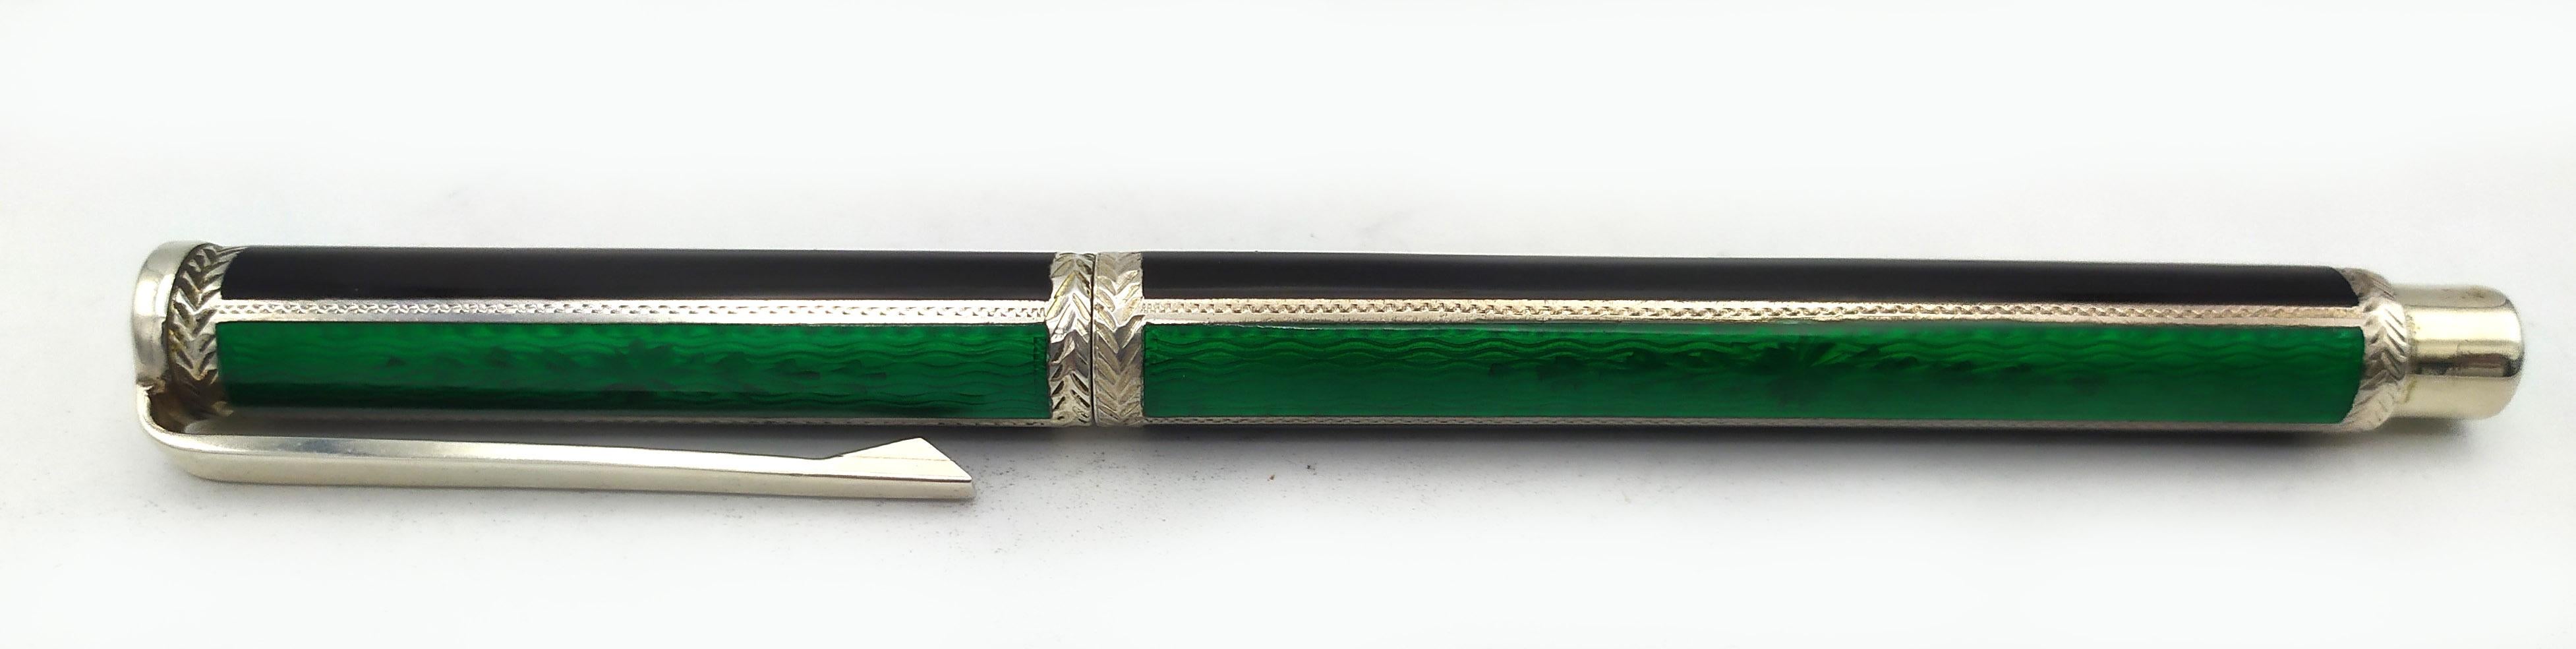 Fountain pen, Ballpoint pen and tray for a Desk Set green enamel Salimbeni  For Sale 8